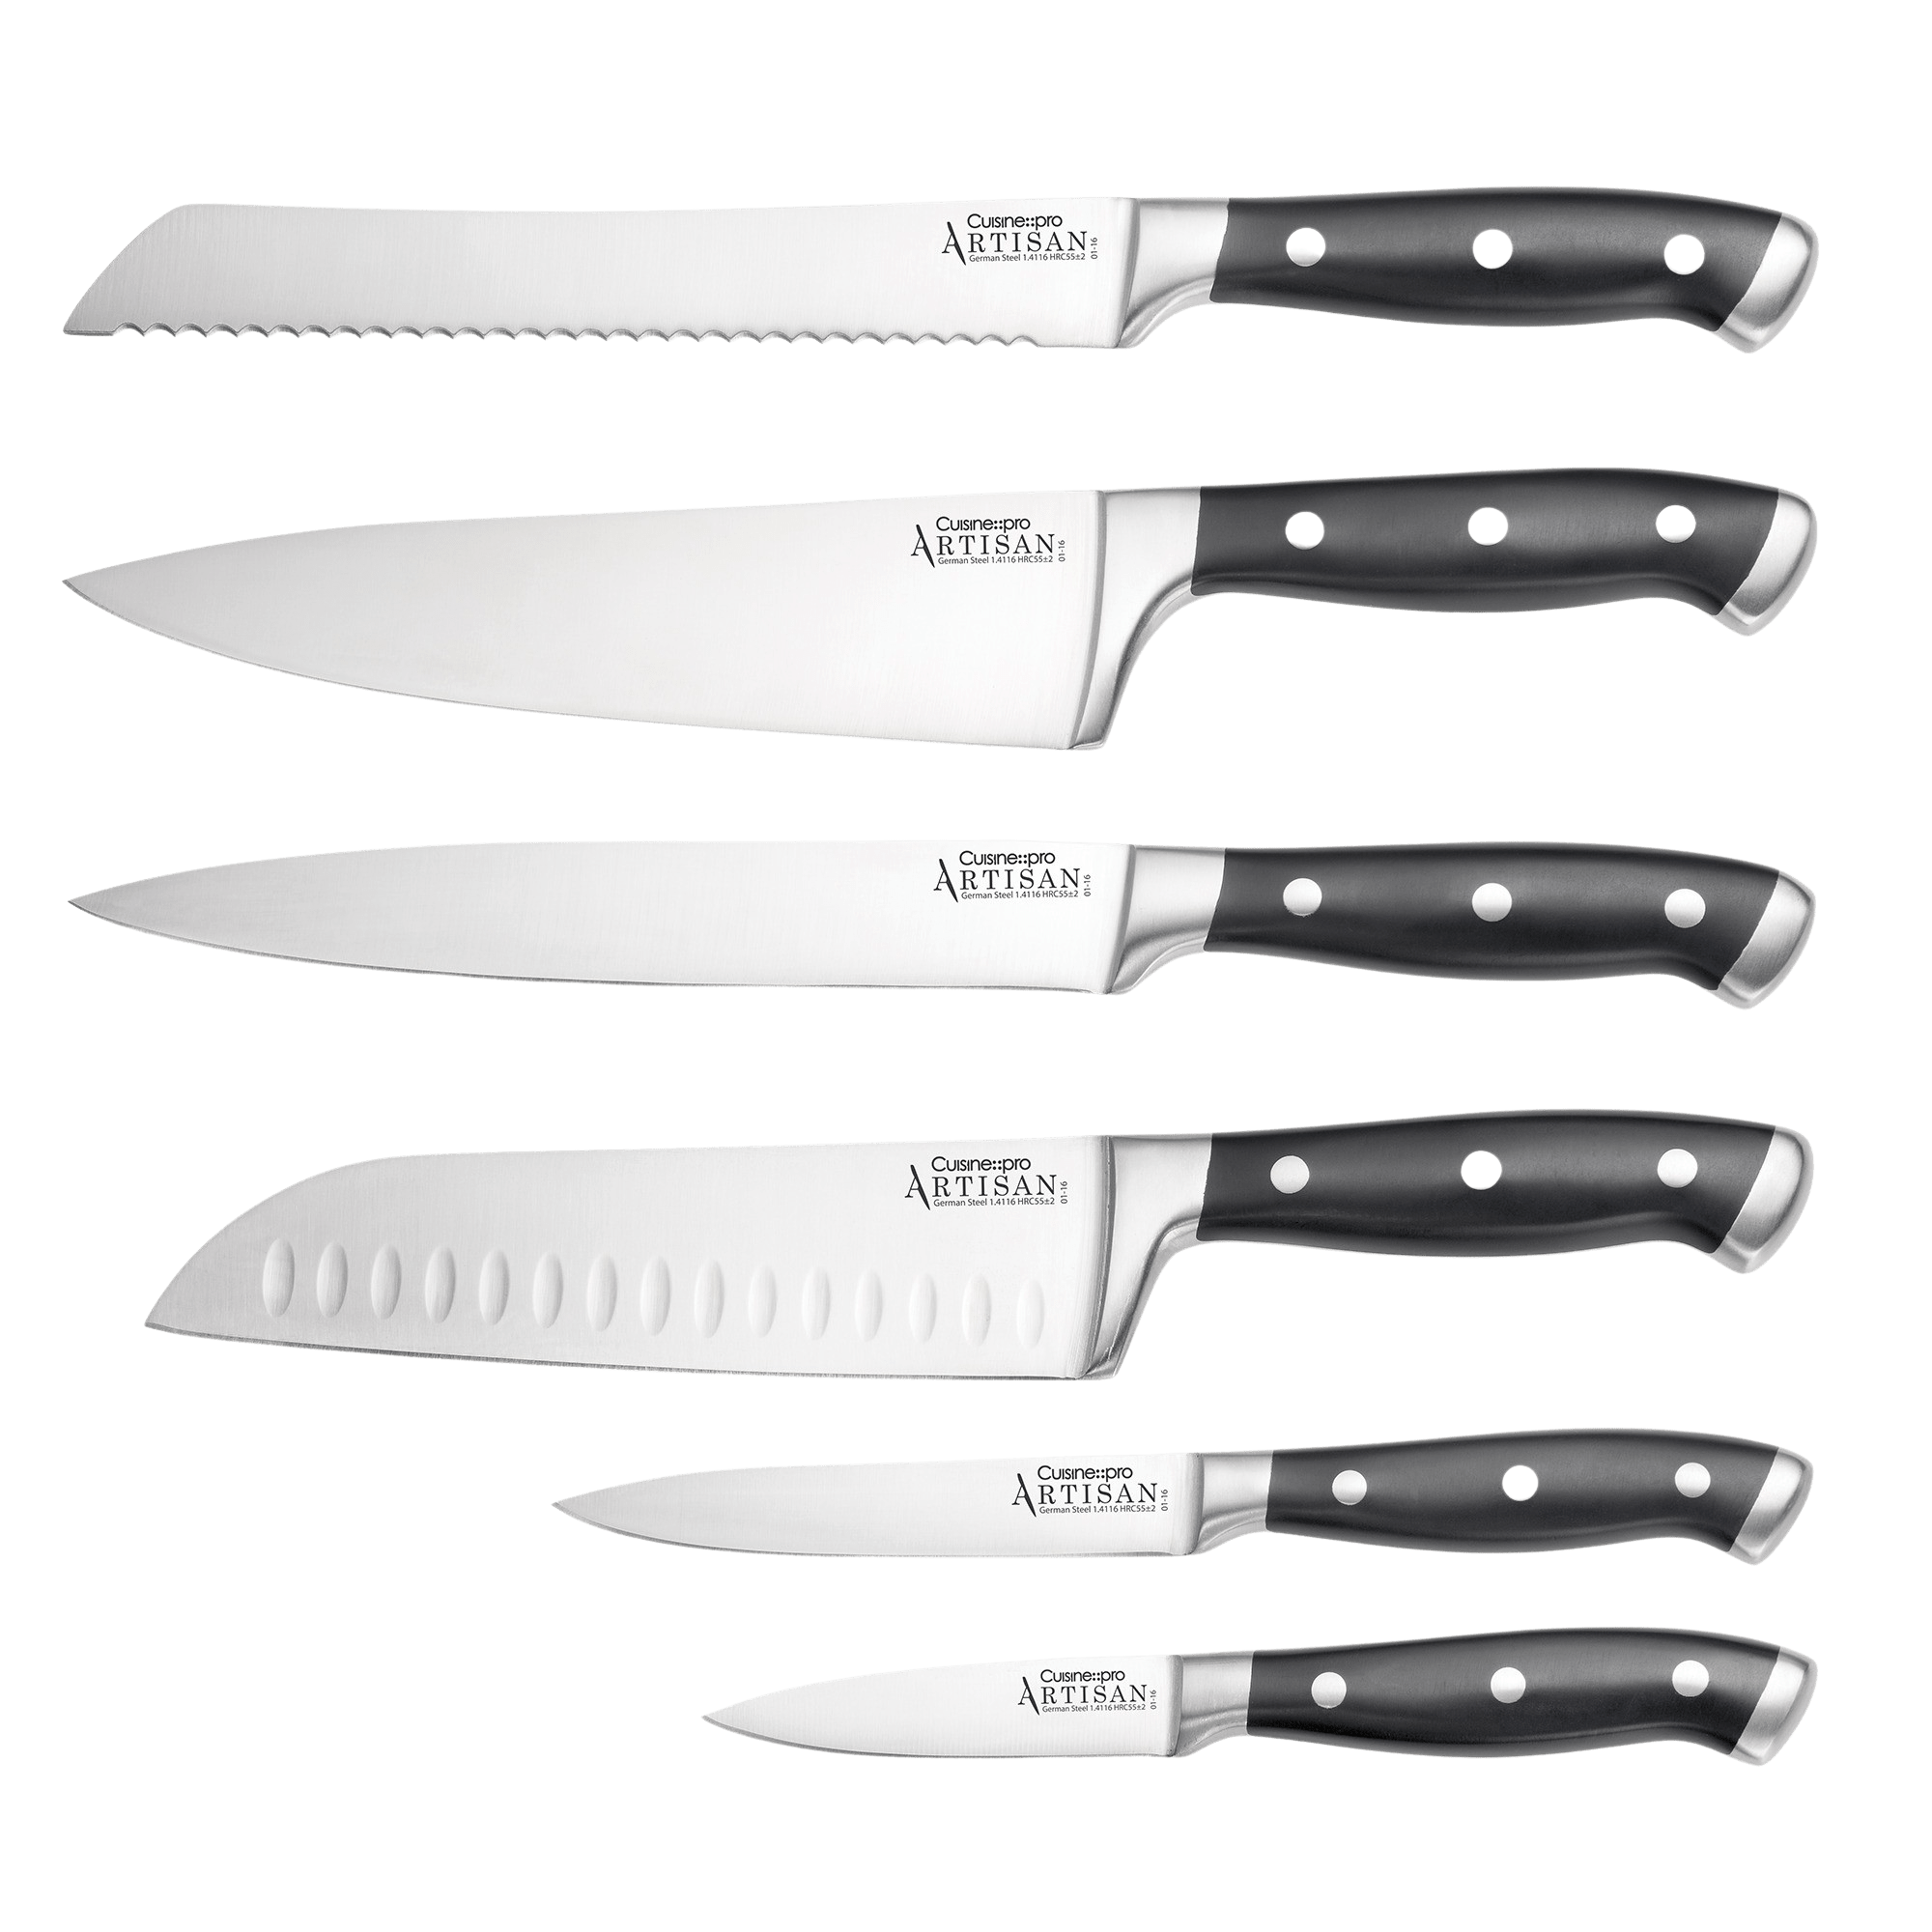 Kitchen Knife Set, German Stainless Steel Knife Block Set, 6 pcs